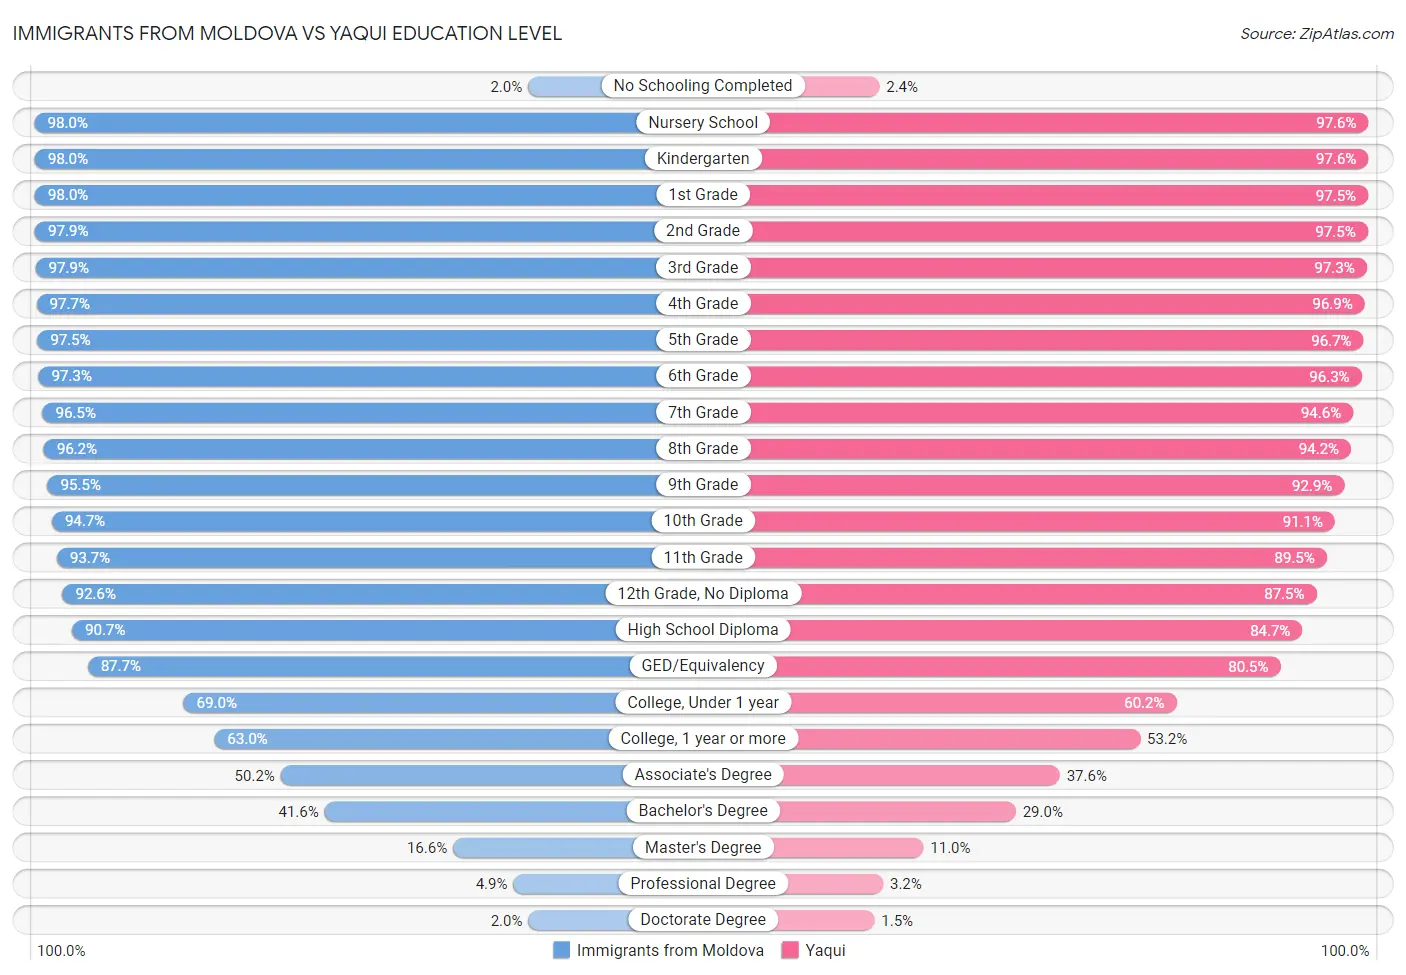 Immigrants from Moldova vs Yaqui Education Level